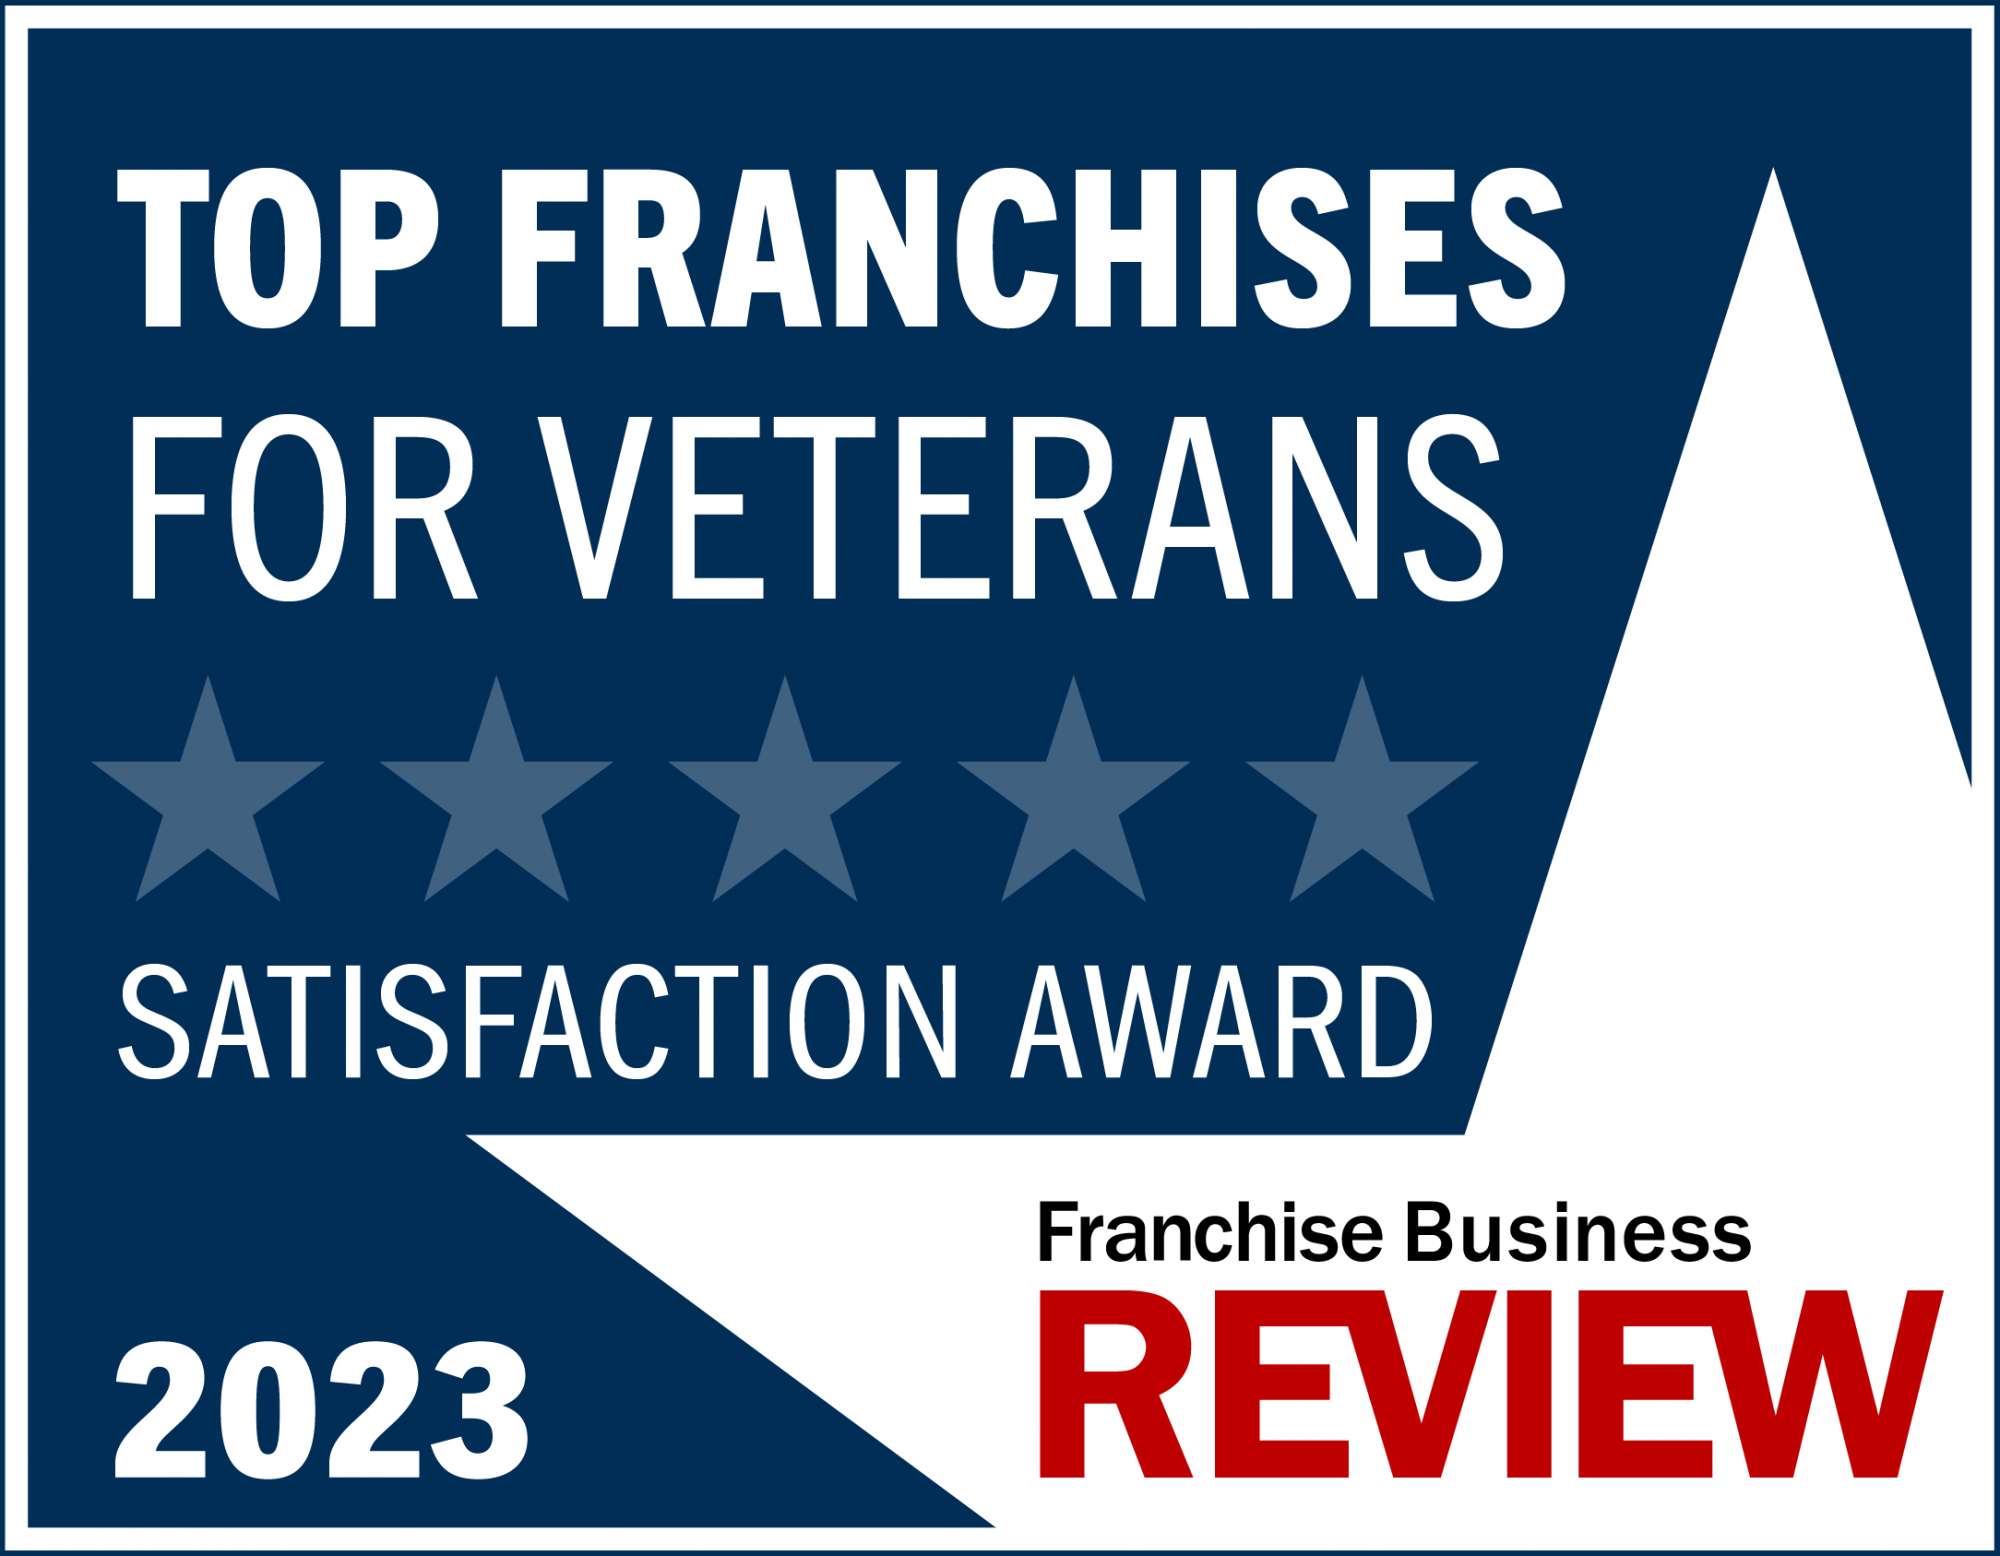 2021 Top Franchises for Veterans - Franchise Business Review